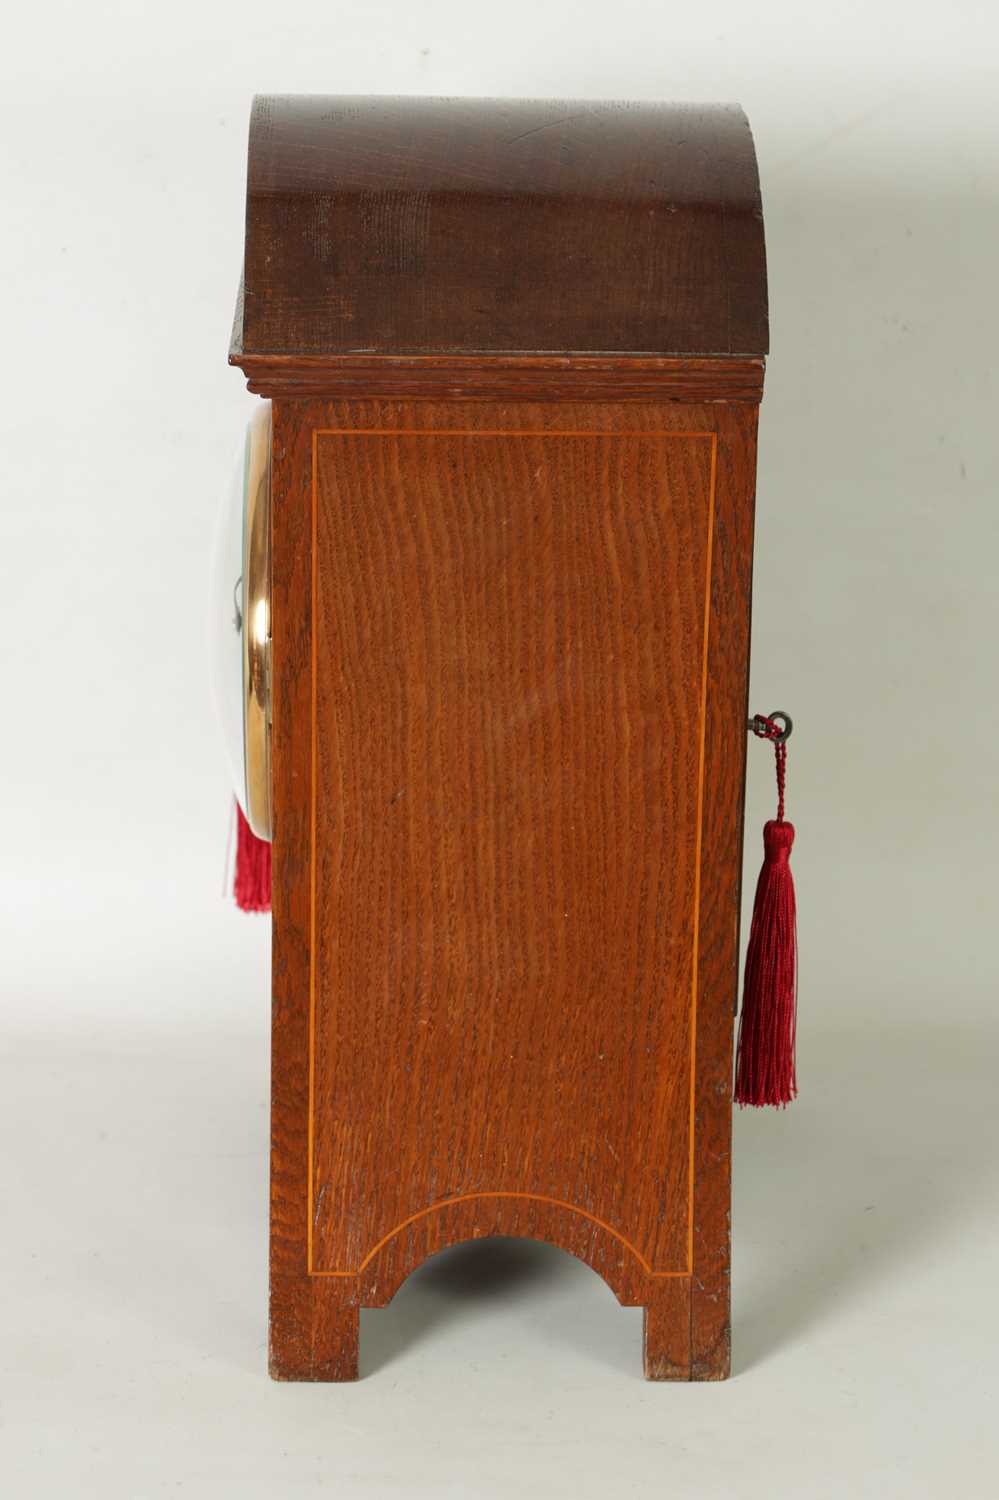 A GERMAN ART NOUVEAU OAK CASED INLAID QUARTER CHIMING BRACKET CLOCK - Image 4 of 7